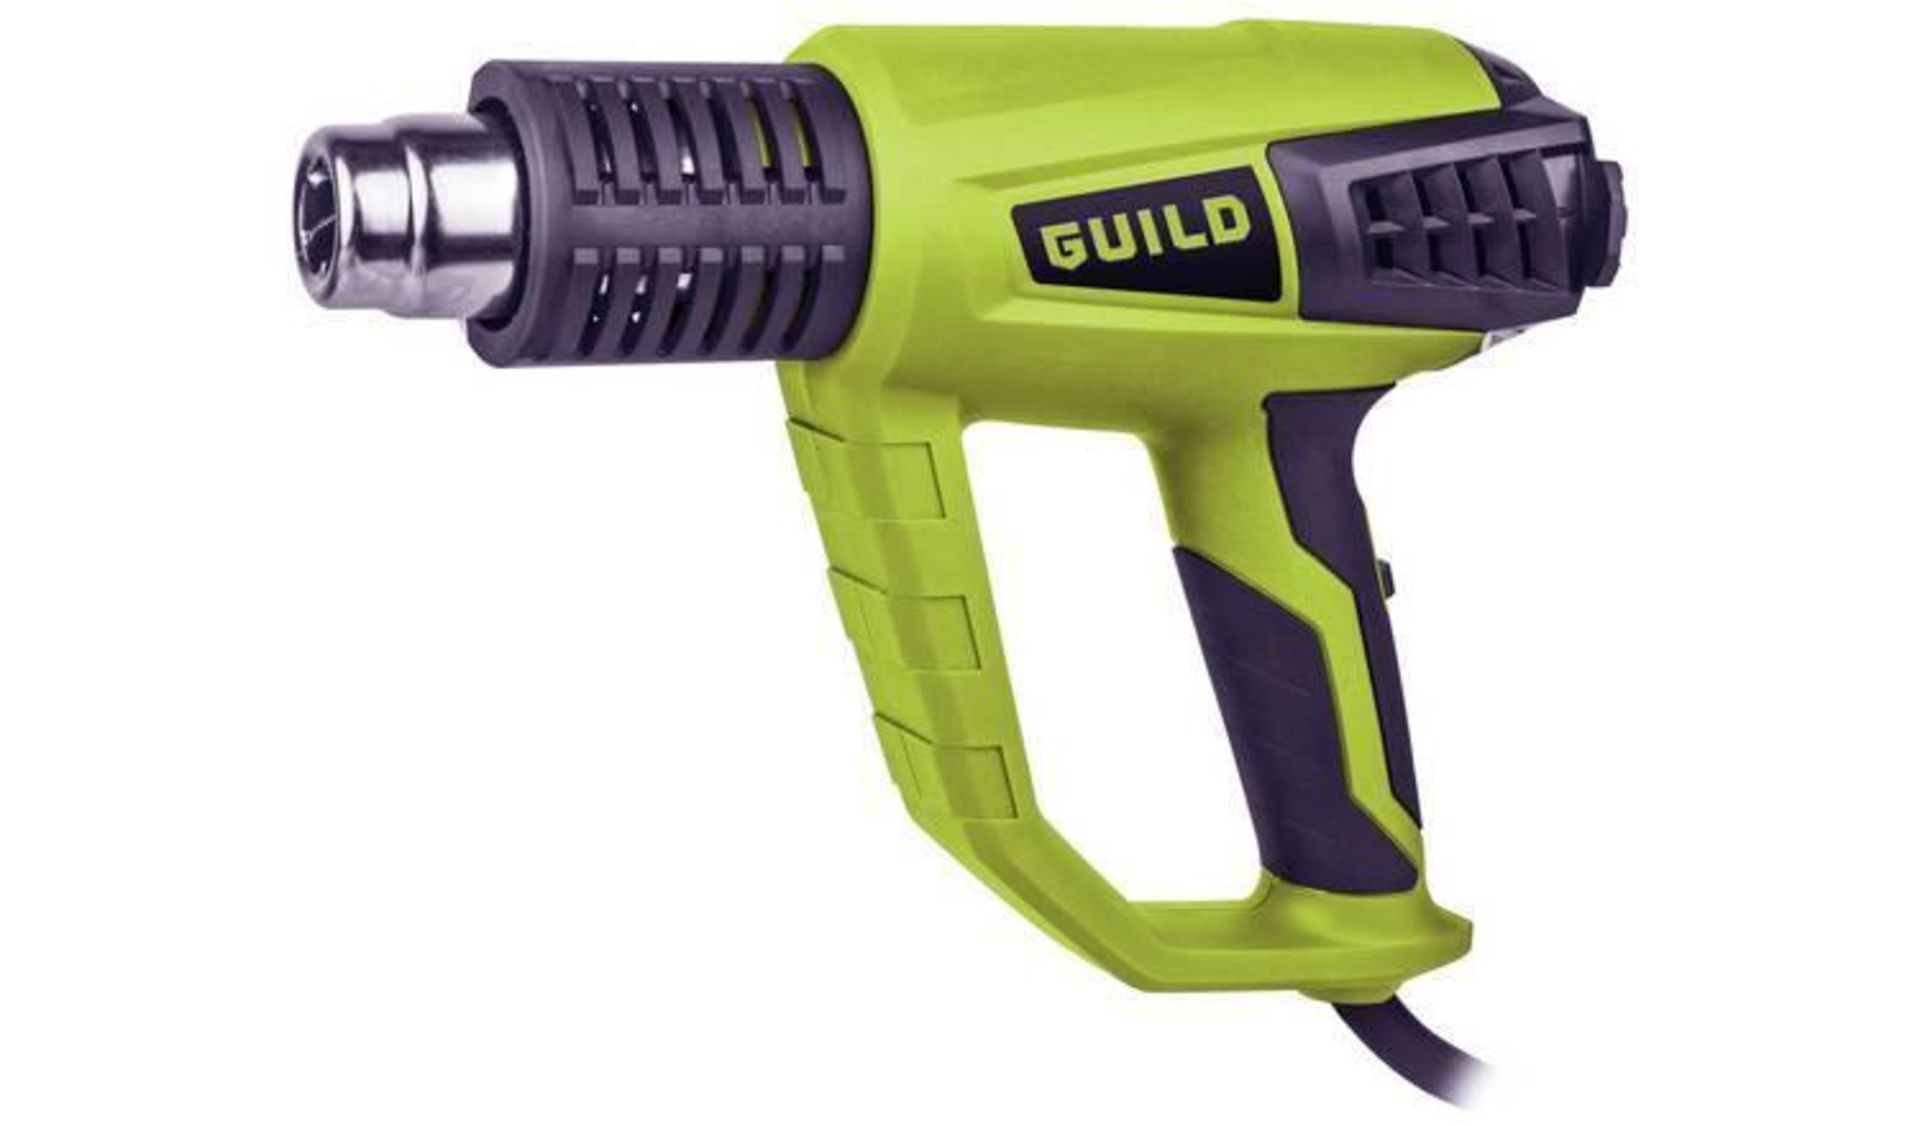 Guild Heat Gun - 2000W PHG200GL £20.00 RRP